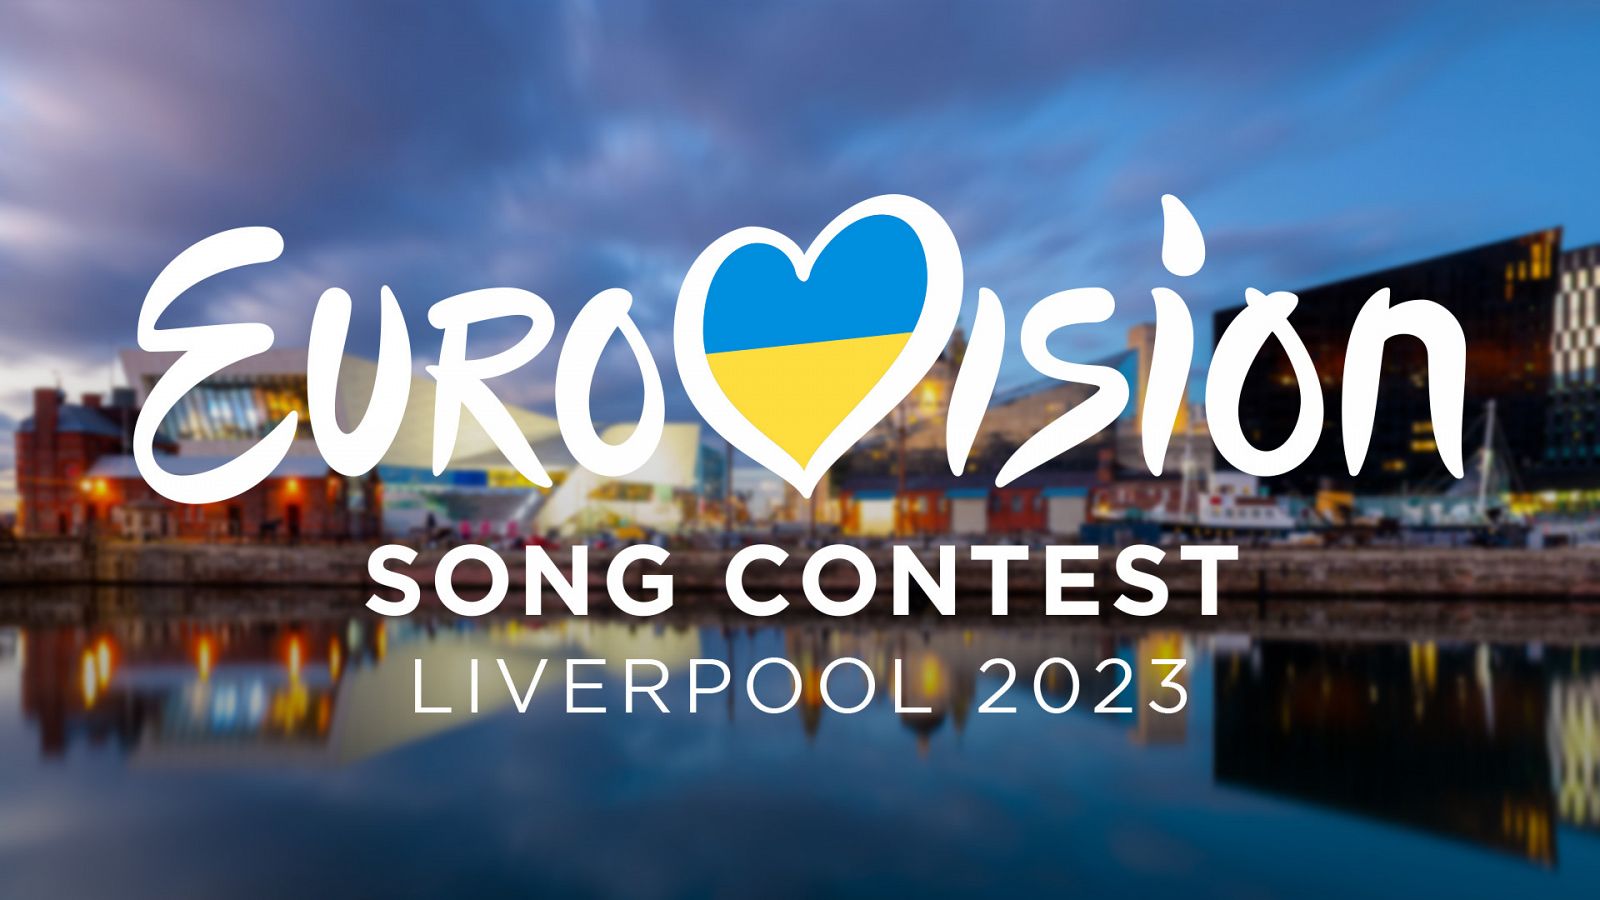 liverpool yacht club eurovision